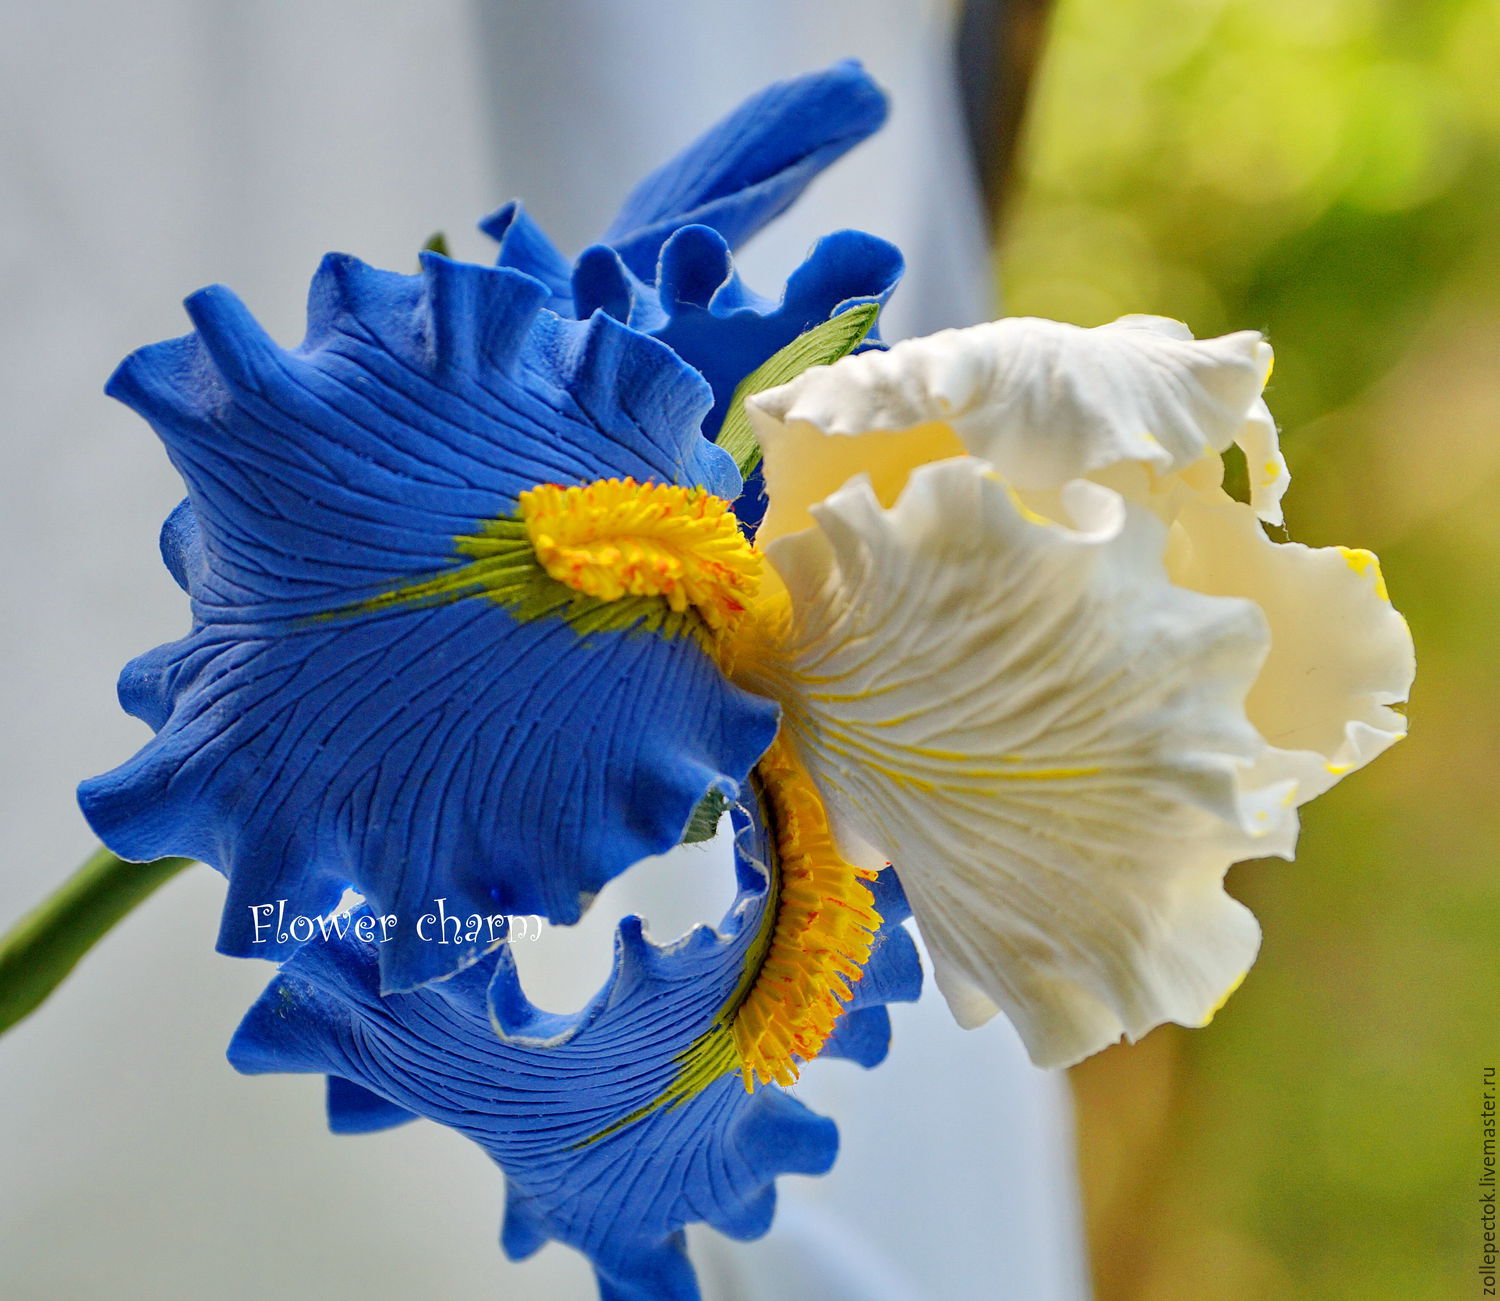 The iris flower 